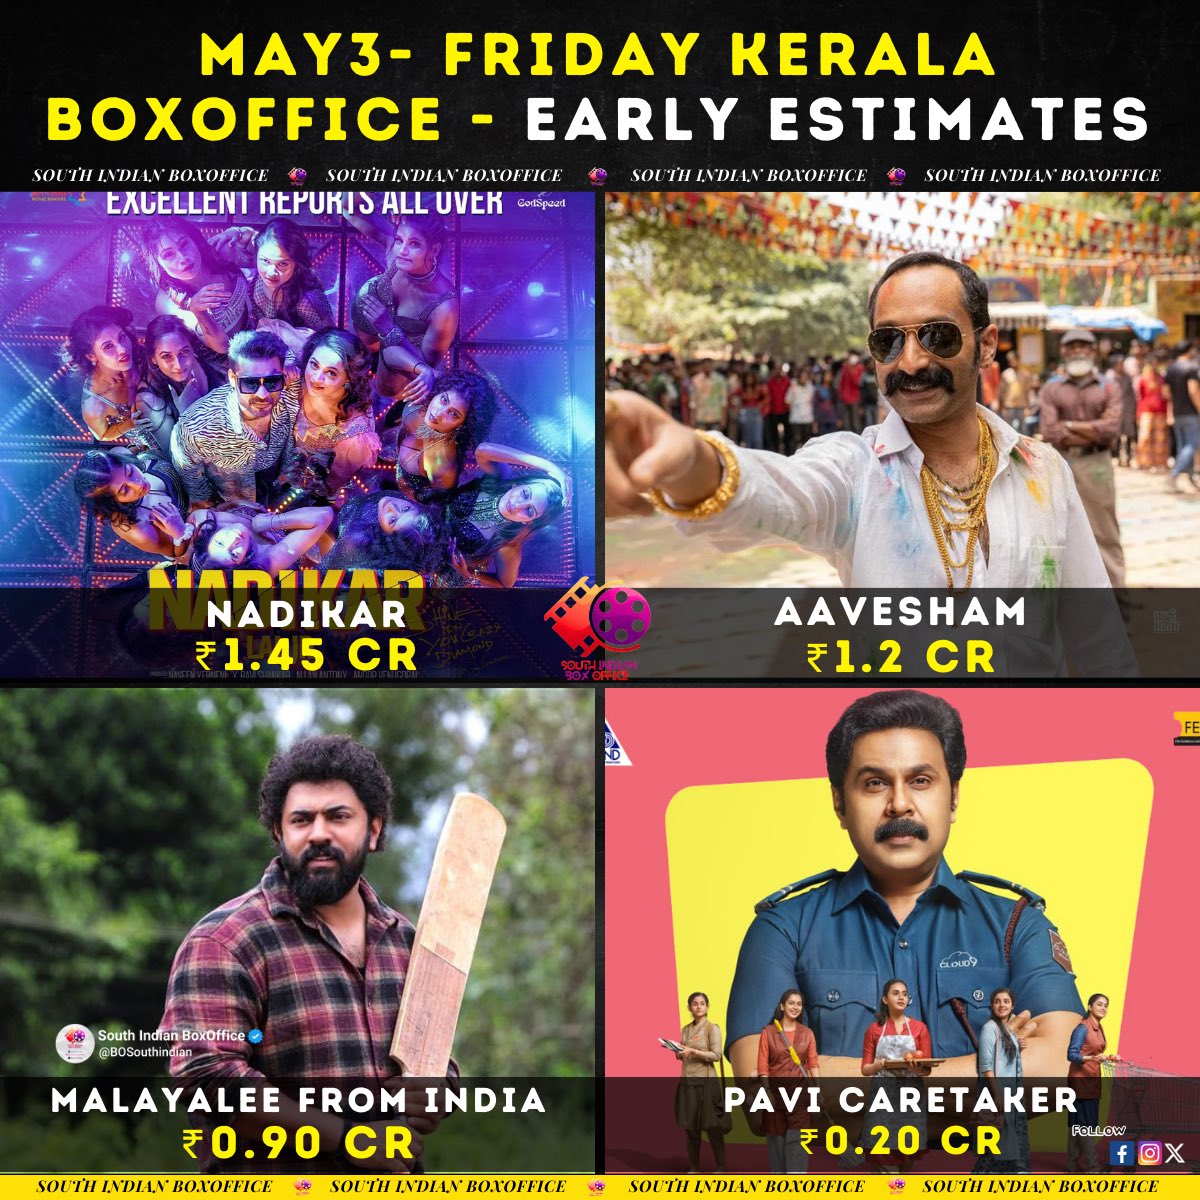 May 3, Friday Kerala BoxOffice Early Estimates;

#Nadikar : ₹1.45 Cr
#Aavesham : ₹1.20 Cr
#MalayaleeFromIndia : ₹0.90 Cr
#PaviCareTaker : ₹0.20 Cr
#VarshagalukkuShesham : ₹0.20 Cr 

Total Est Kerala gross :  ₹3.95 Cr